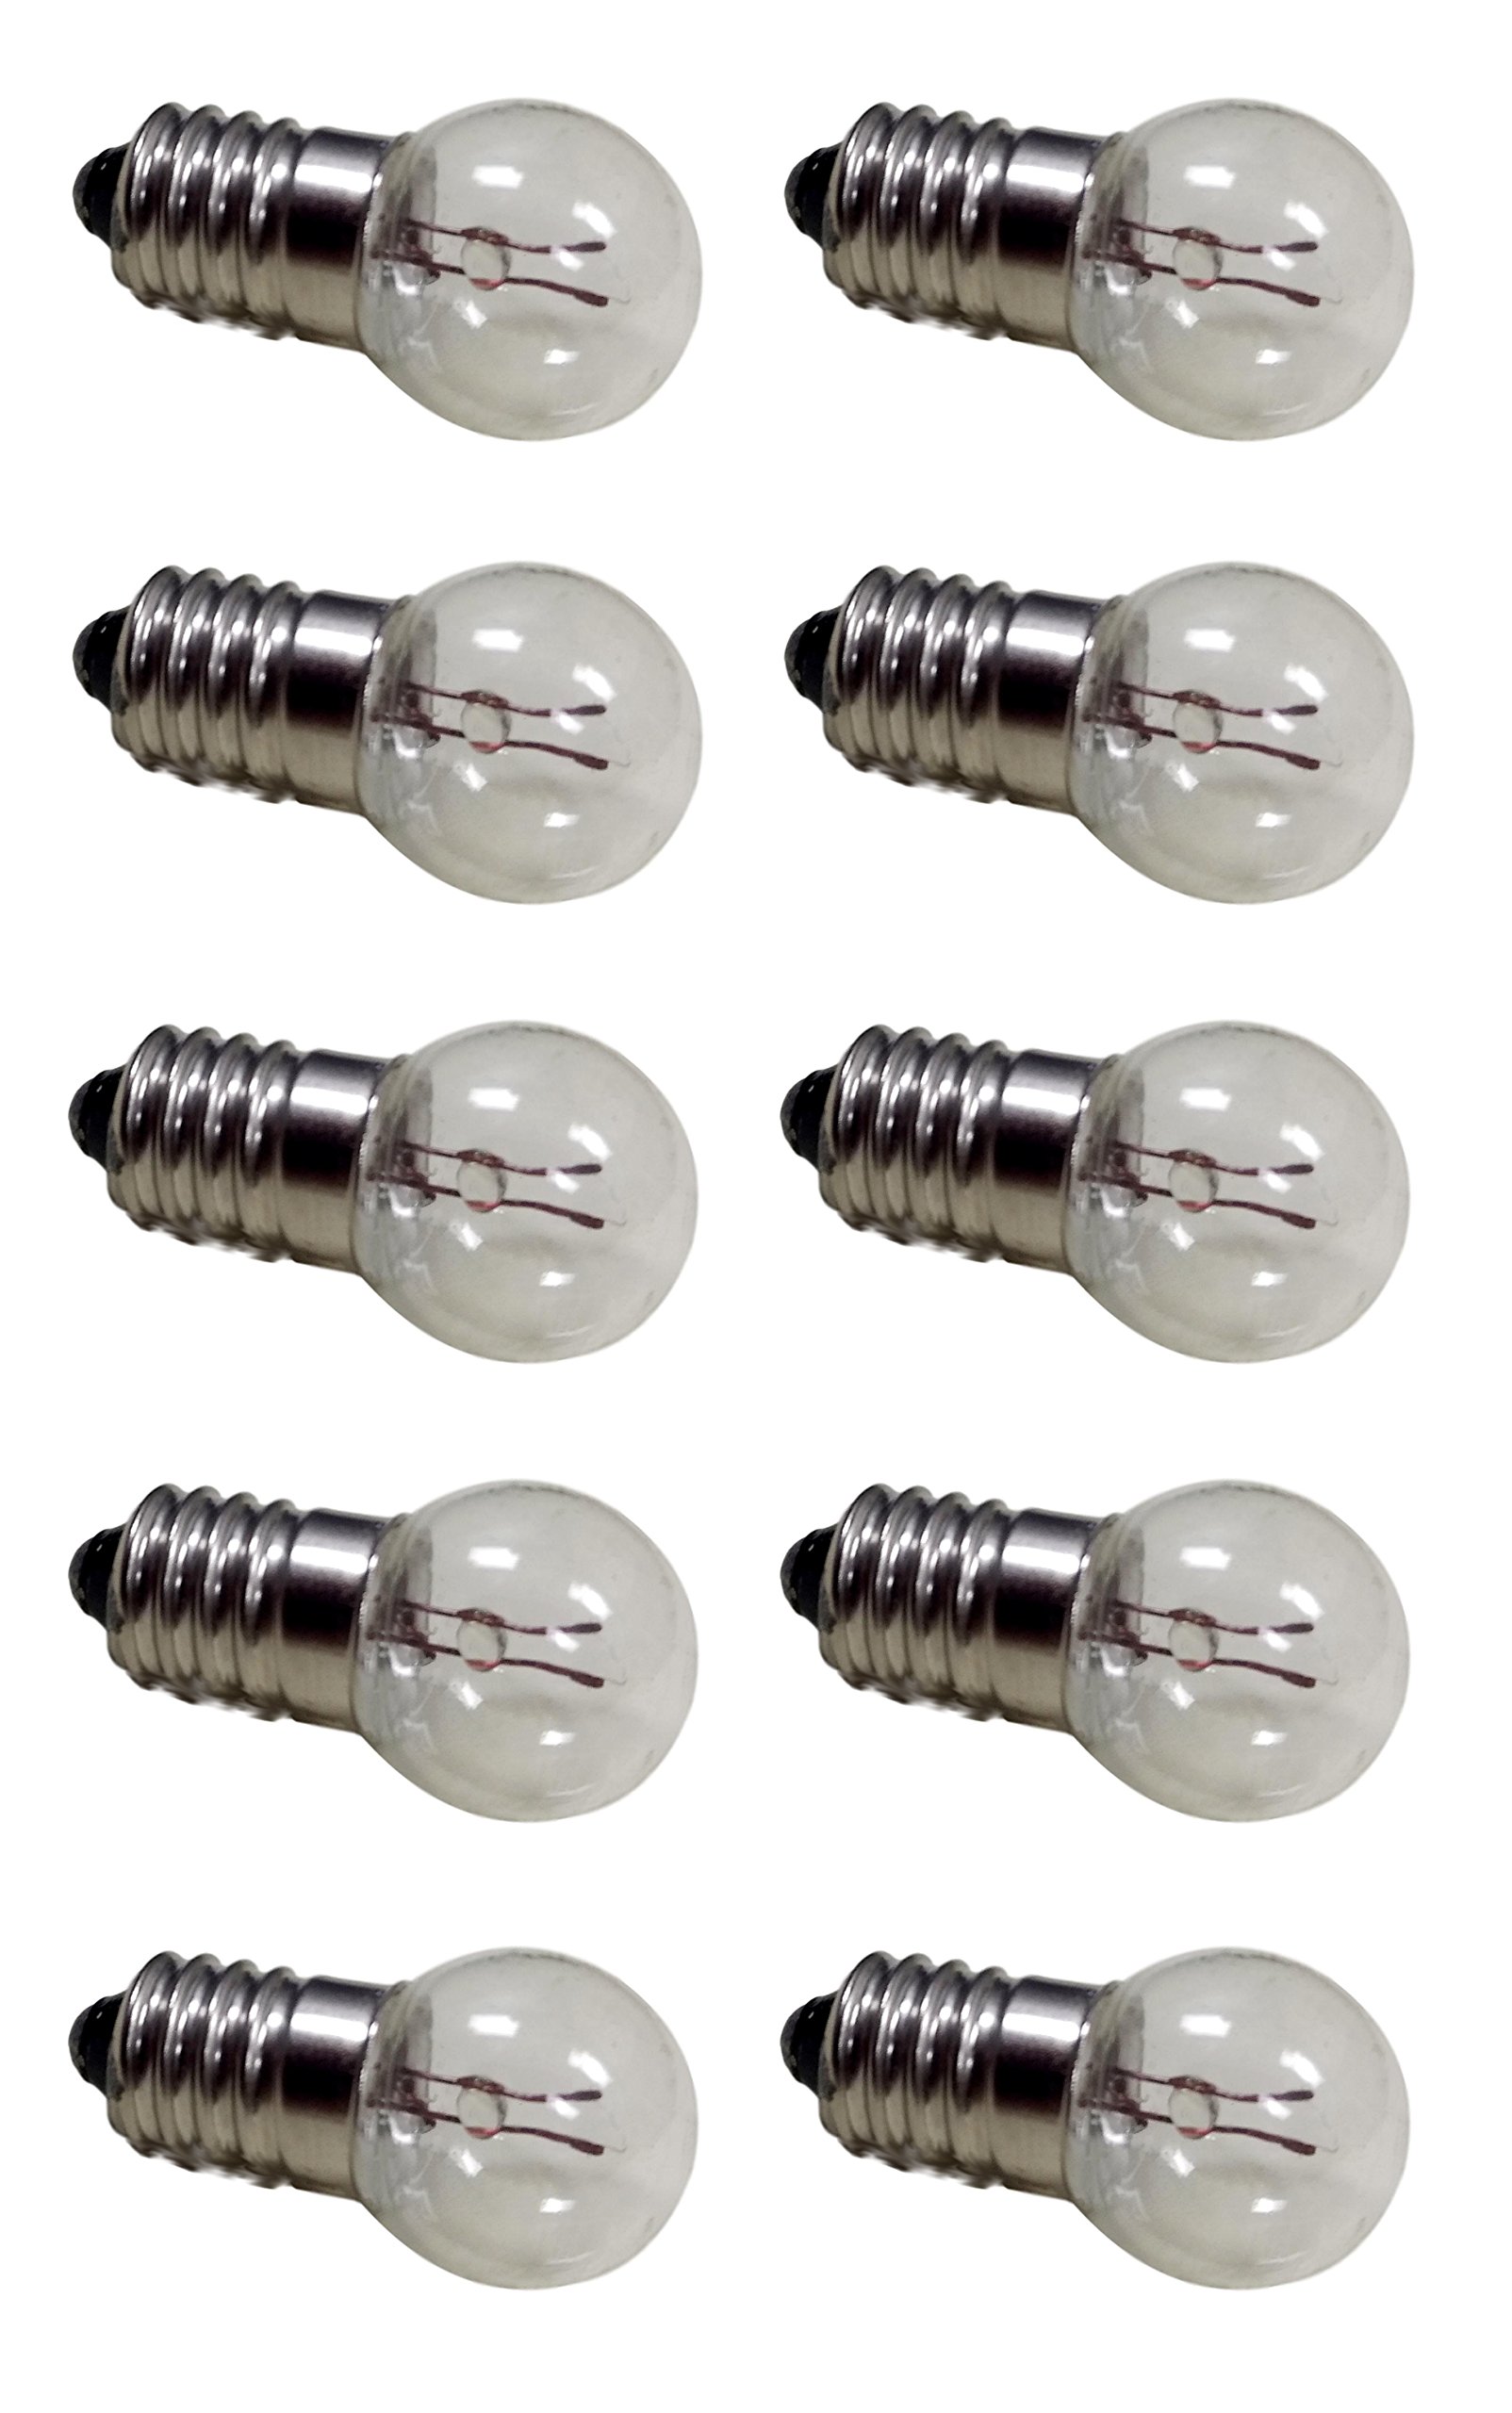 Book Cover Mini Lamps 3.8v, 0.2A - Pack of 10 Miniature Bulbs